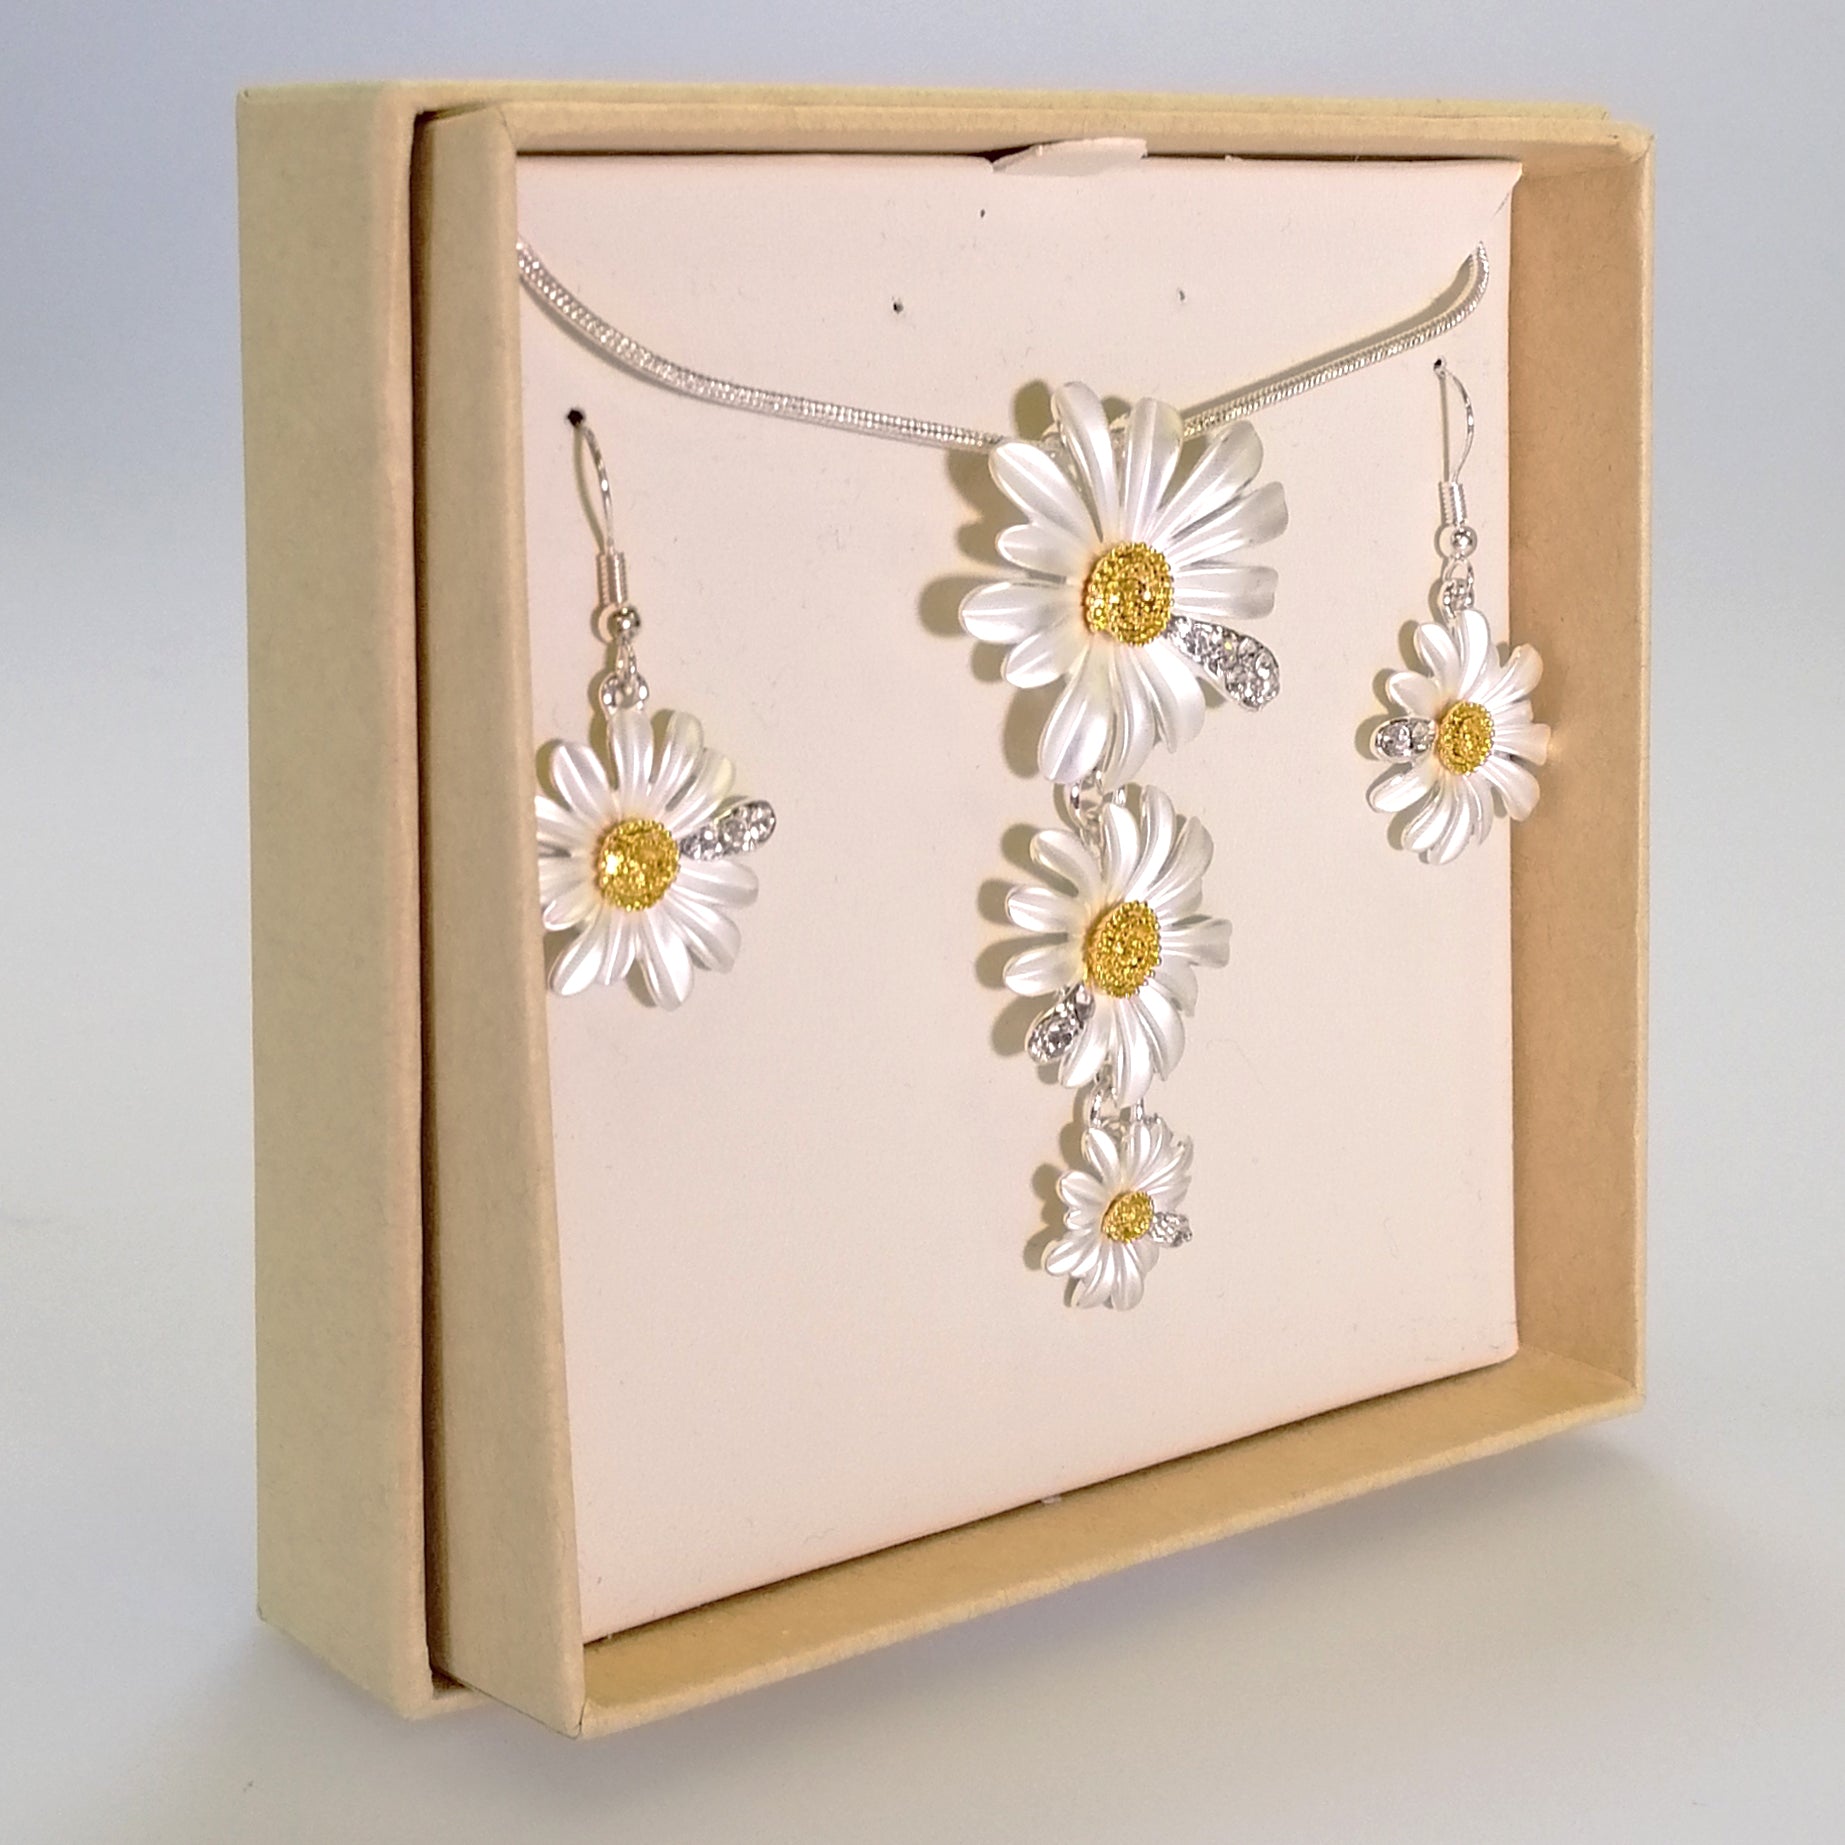 Kiwicraft - Daisy Chain Necklace & Earrings Set